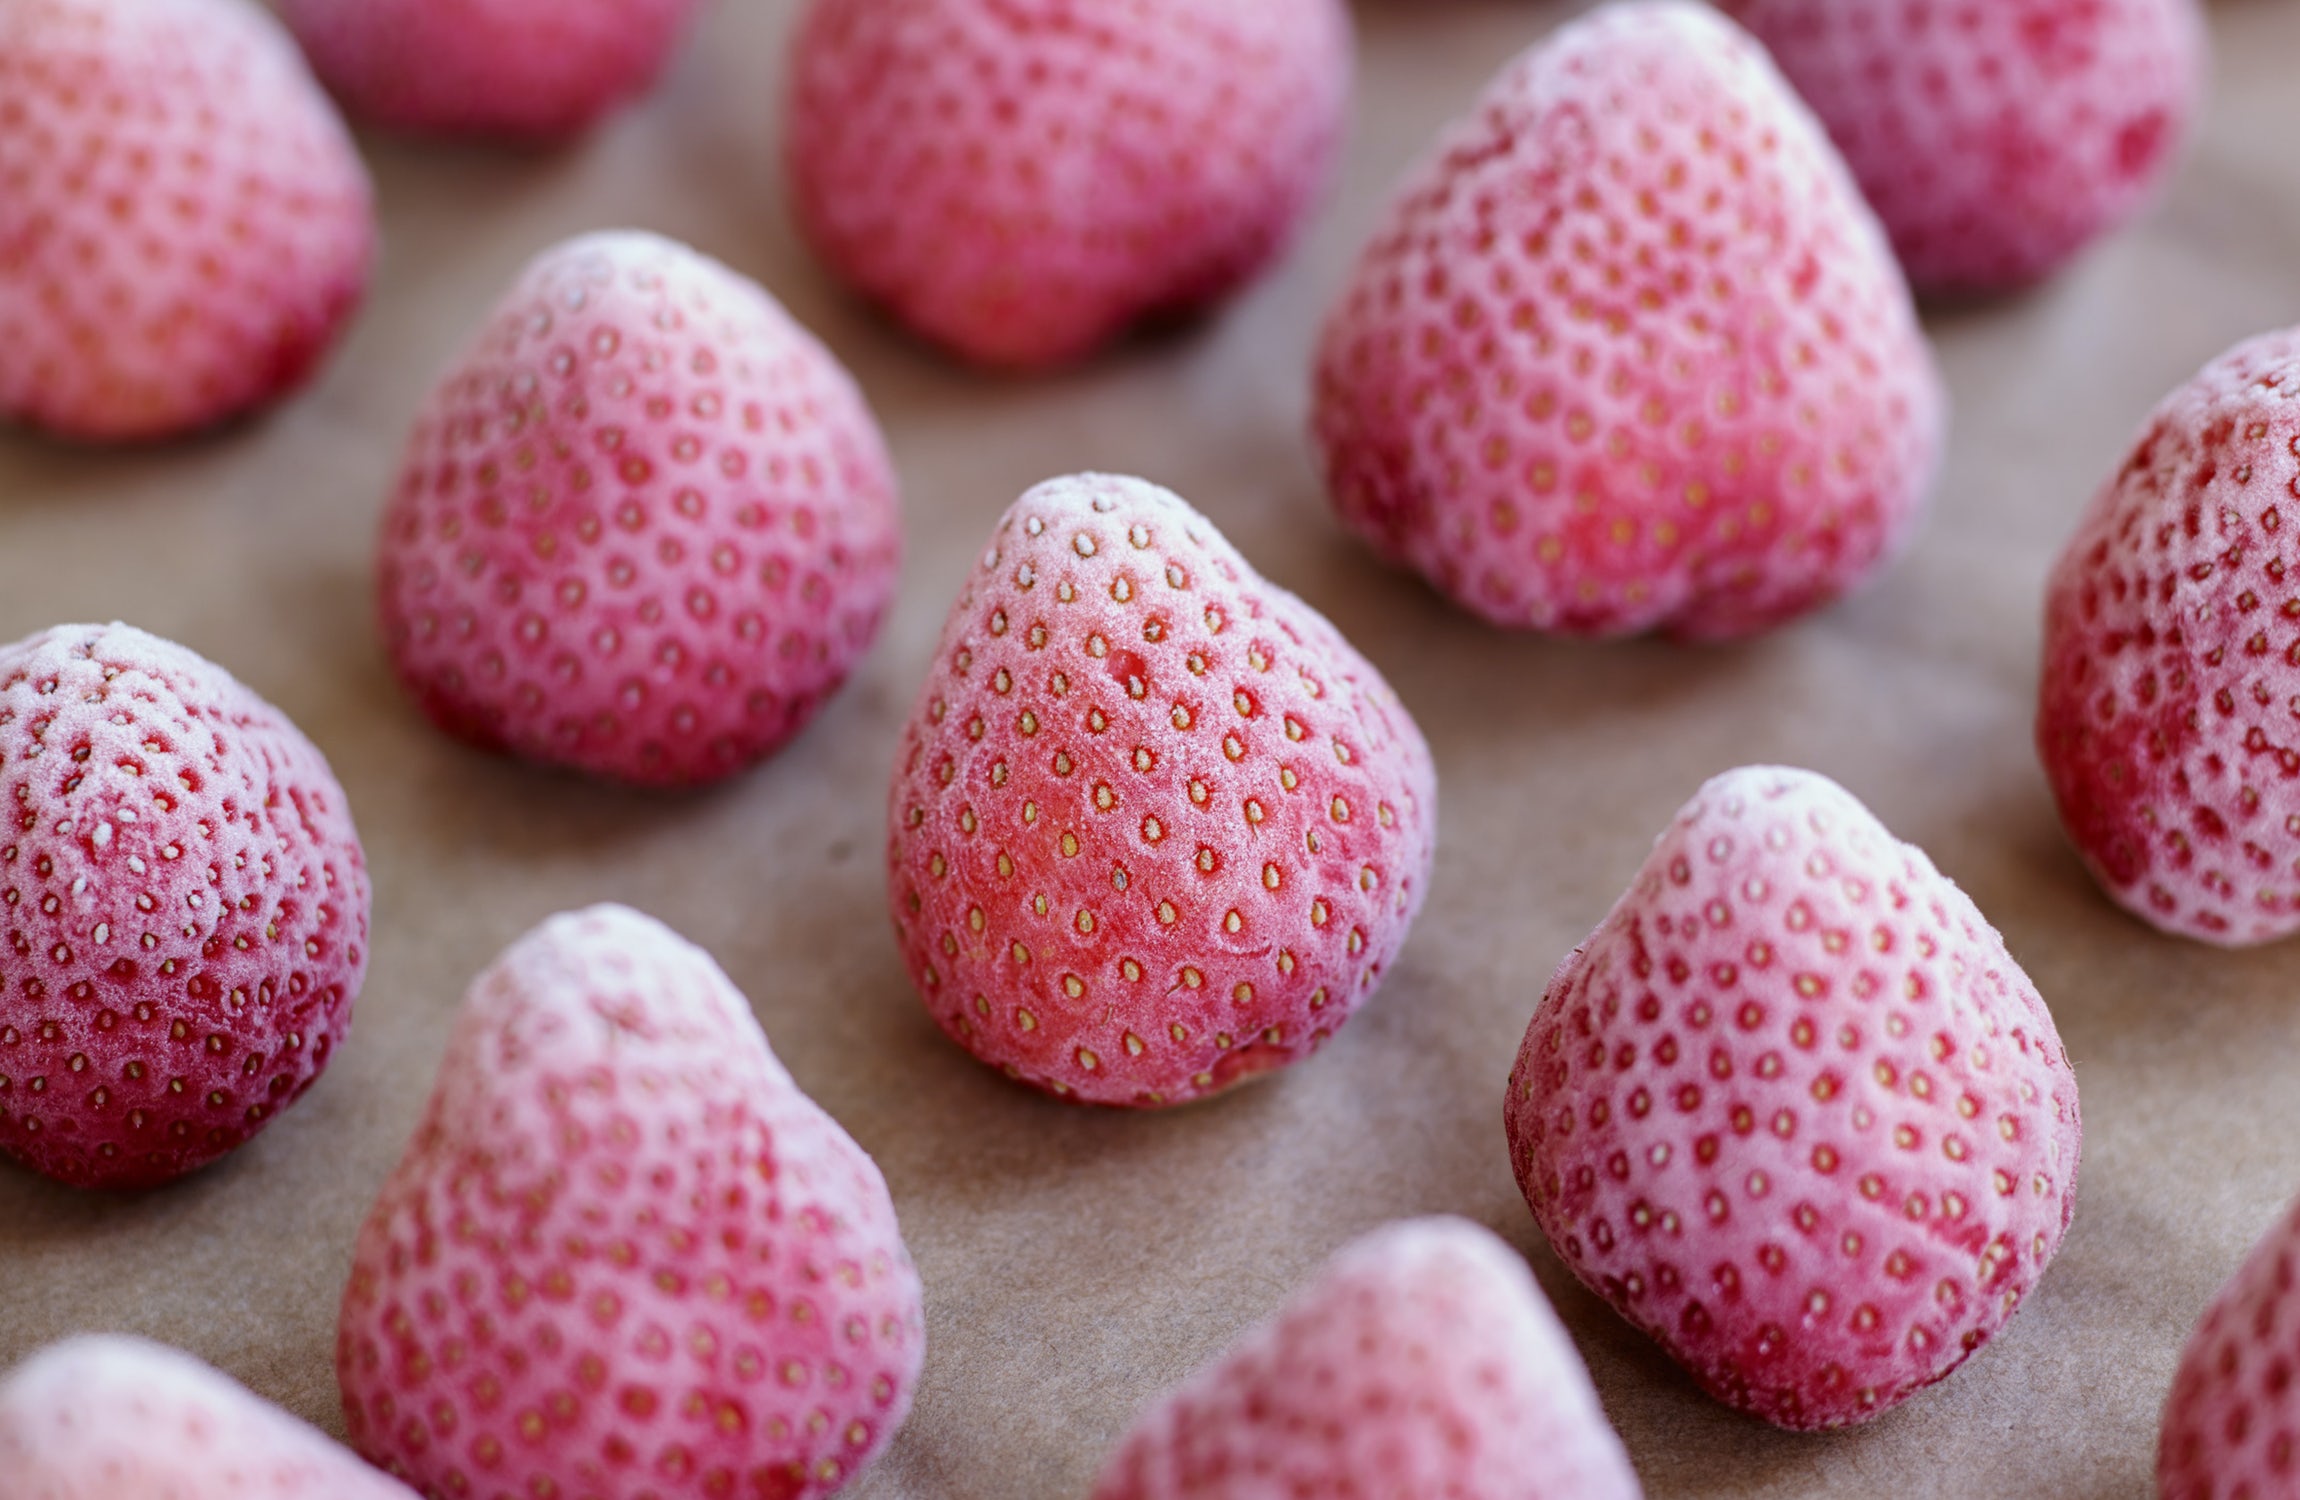 Can you freeze fresh strawberries